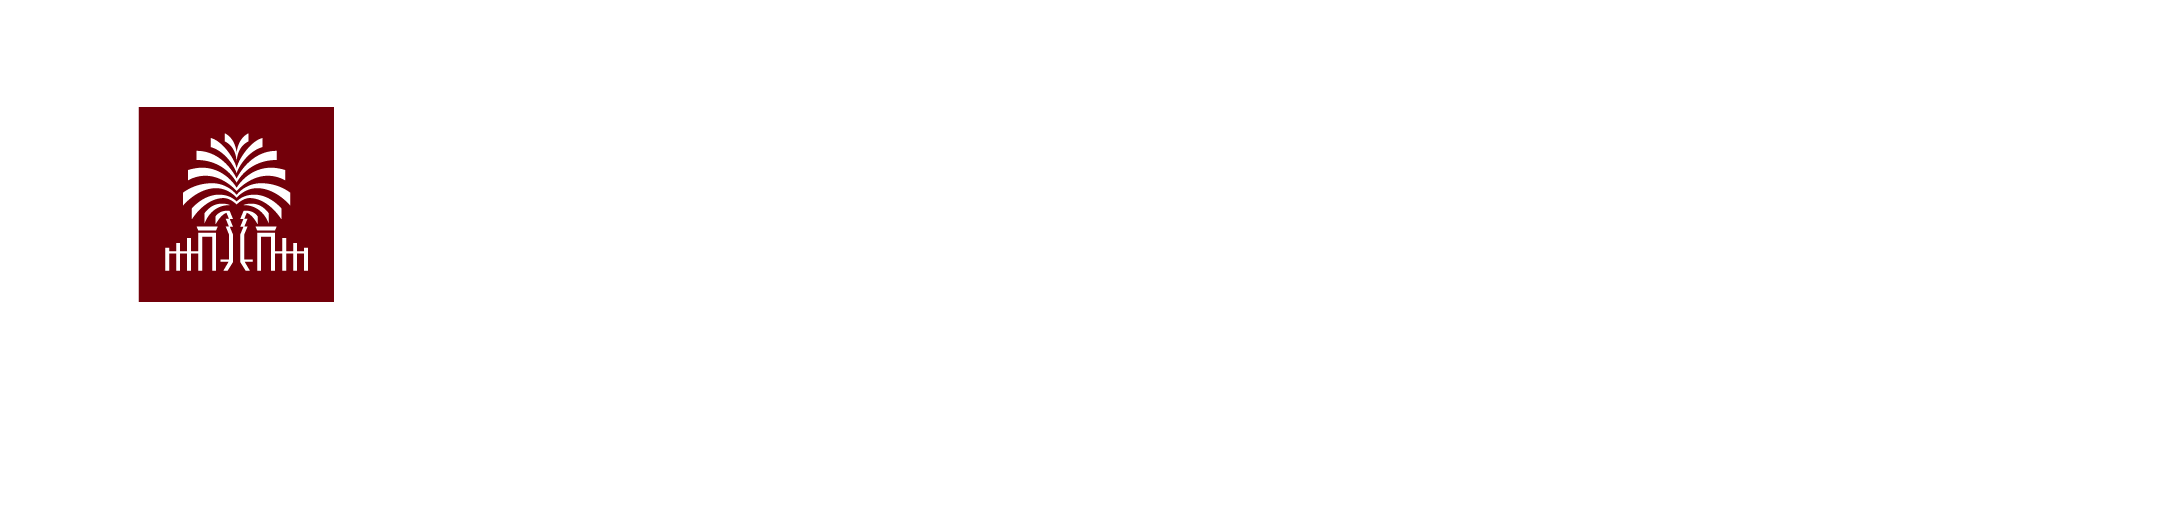 School of Visual Art and Design at the University of South Carolina